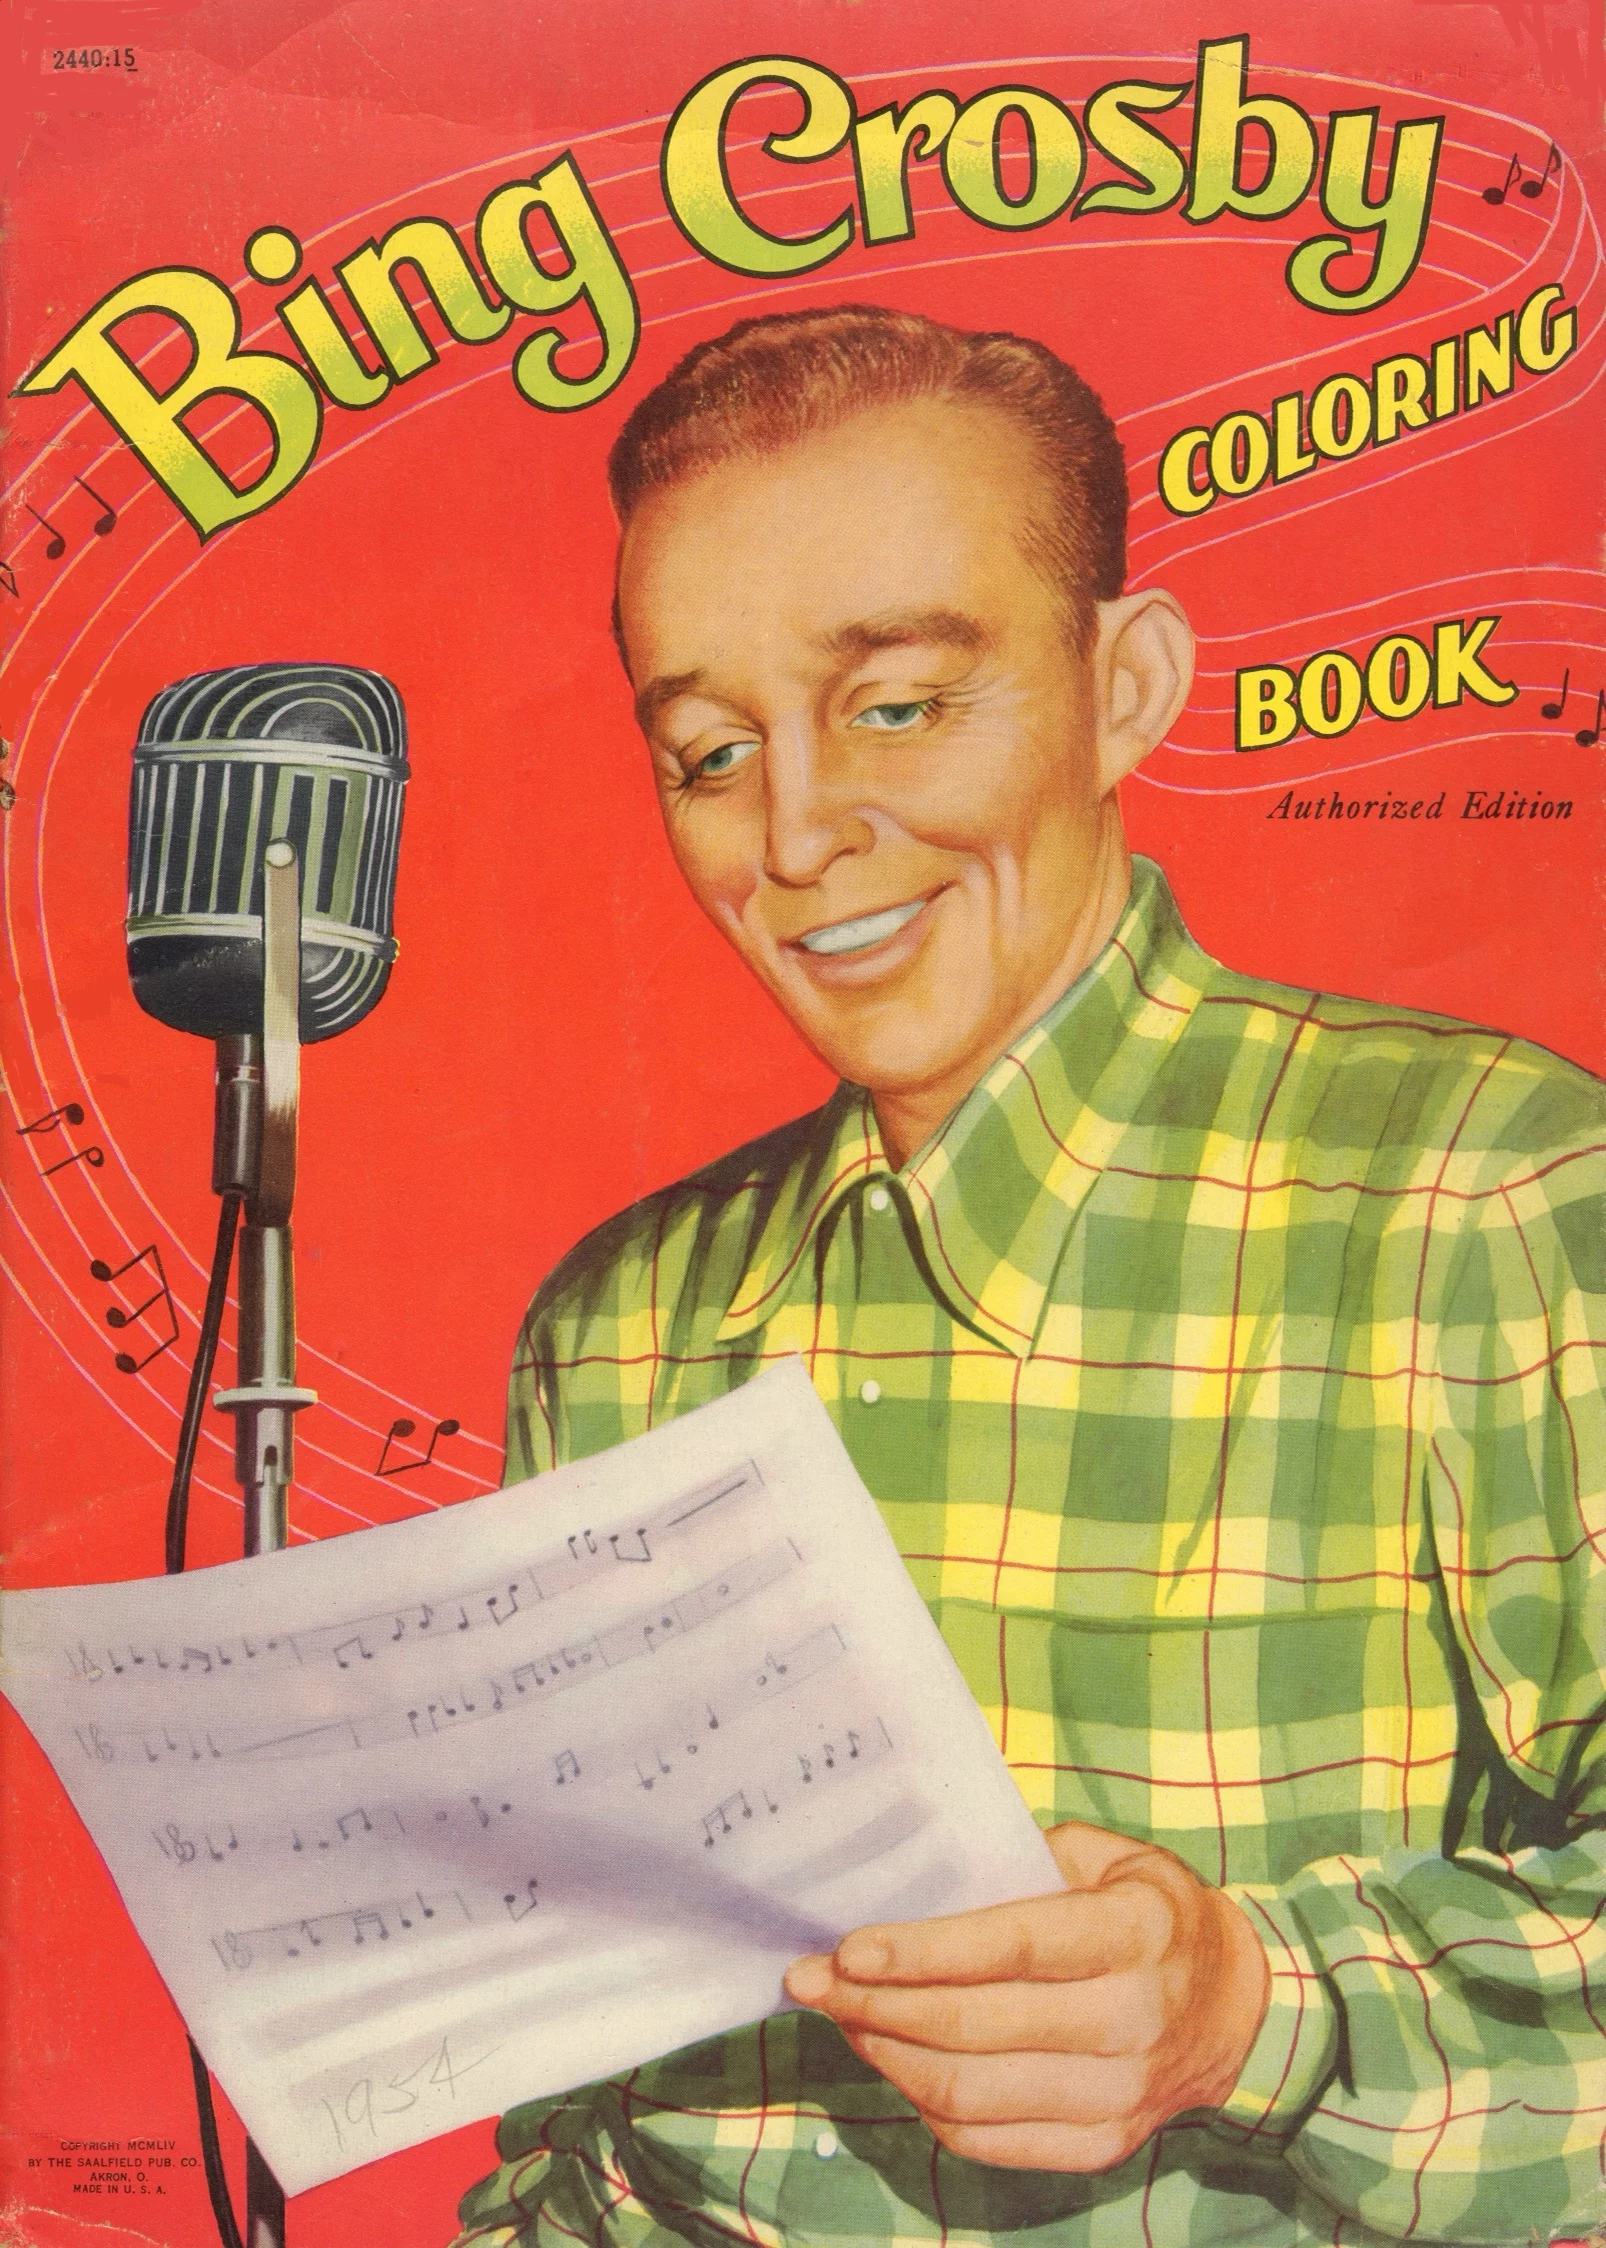 Bing Crosby Coloring Book